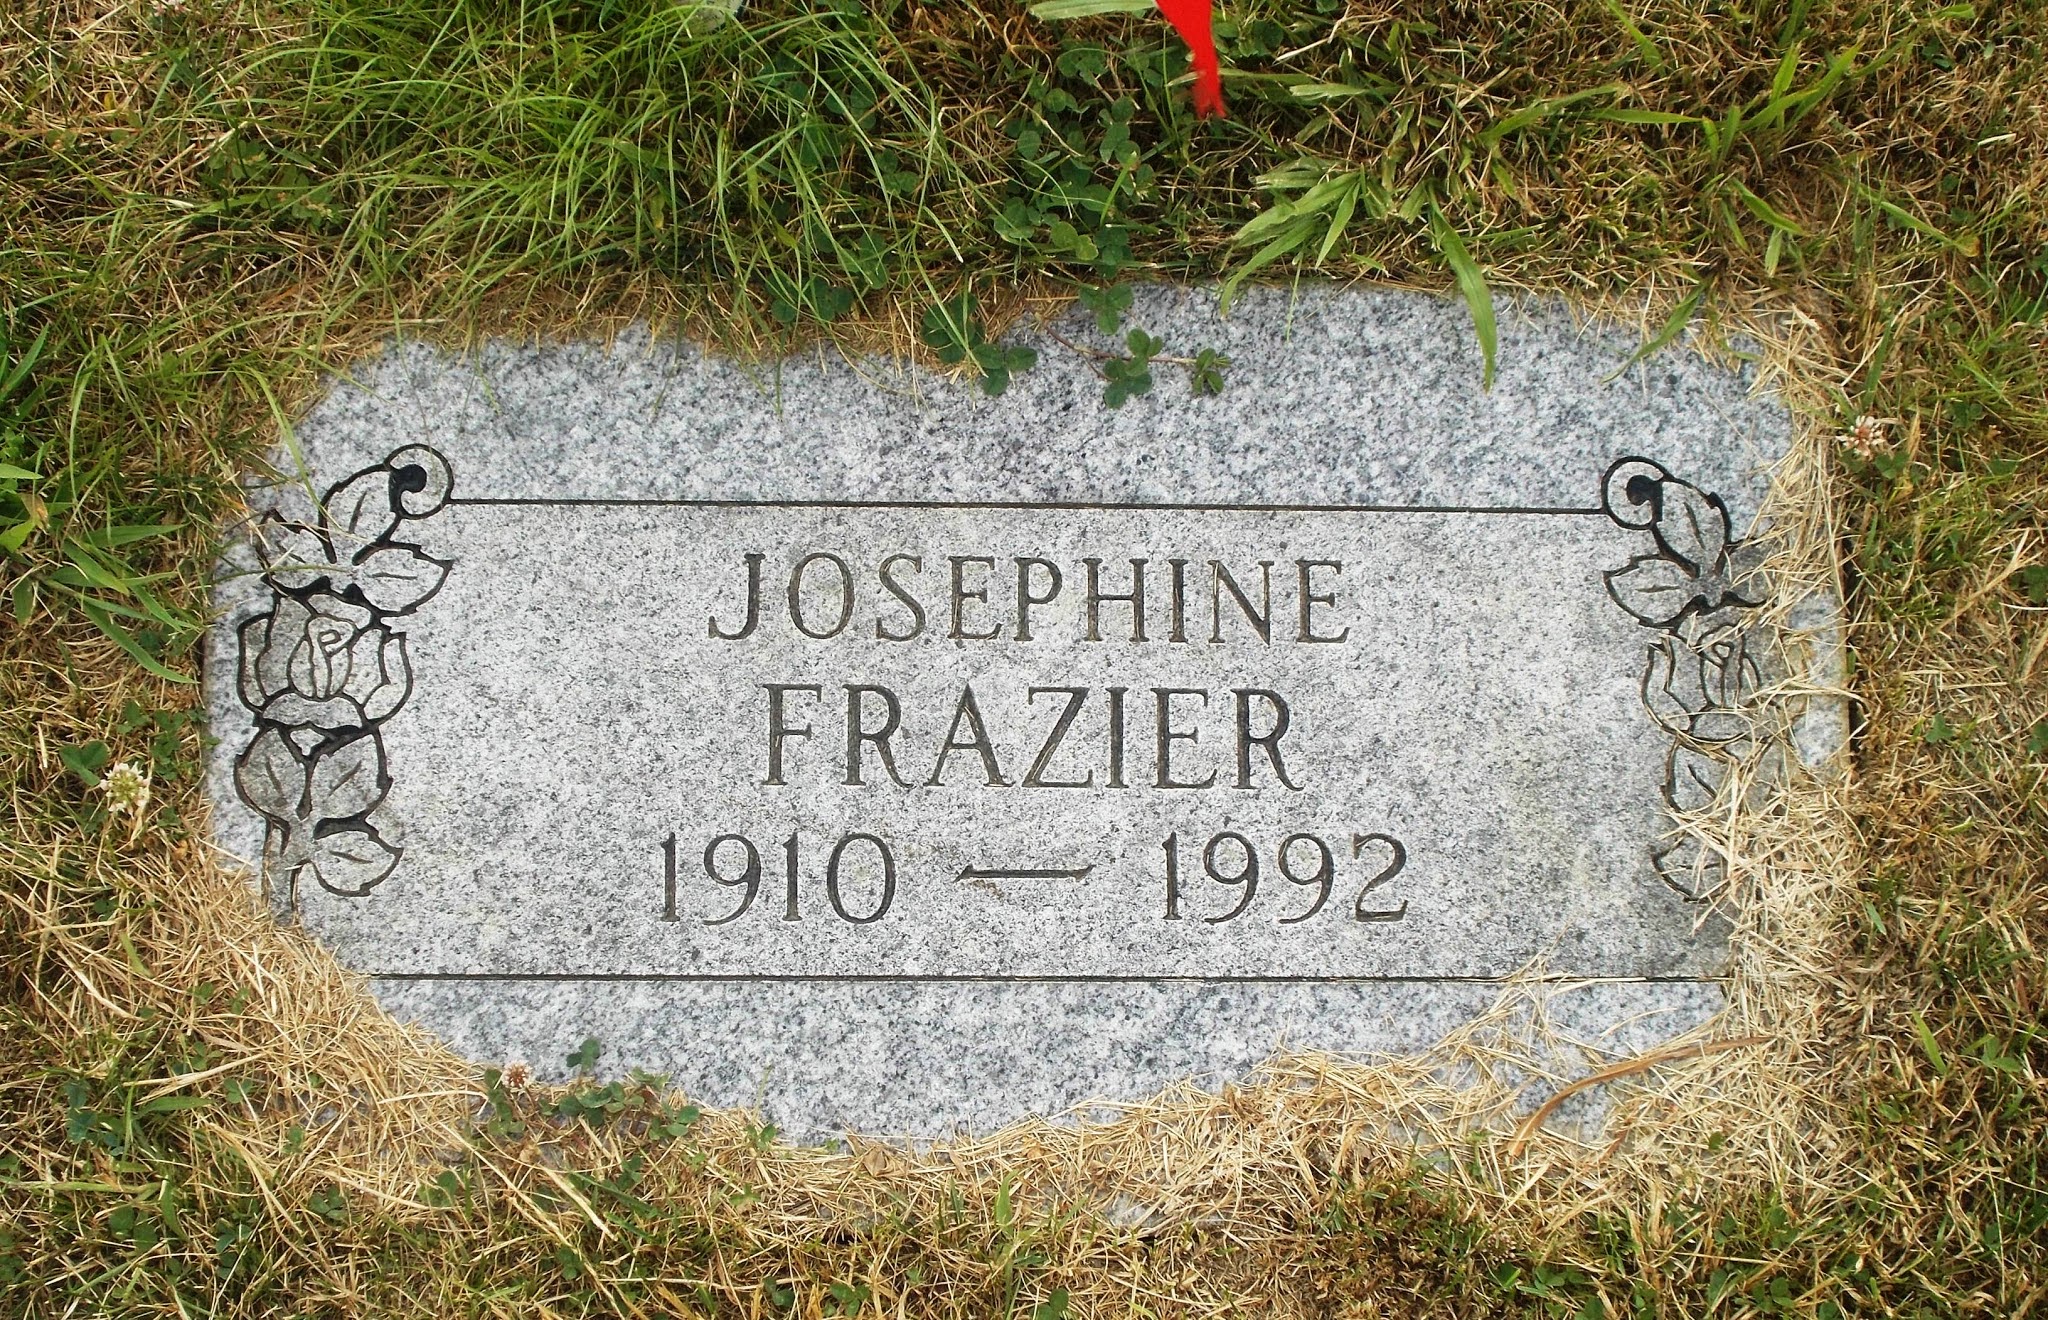 Josephine Frazier